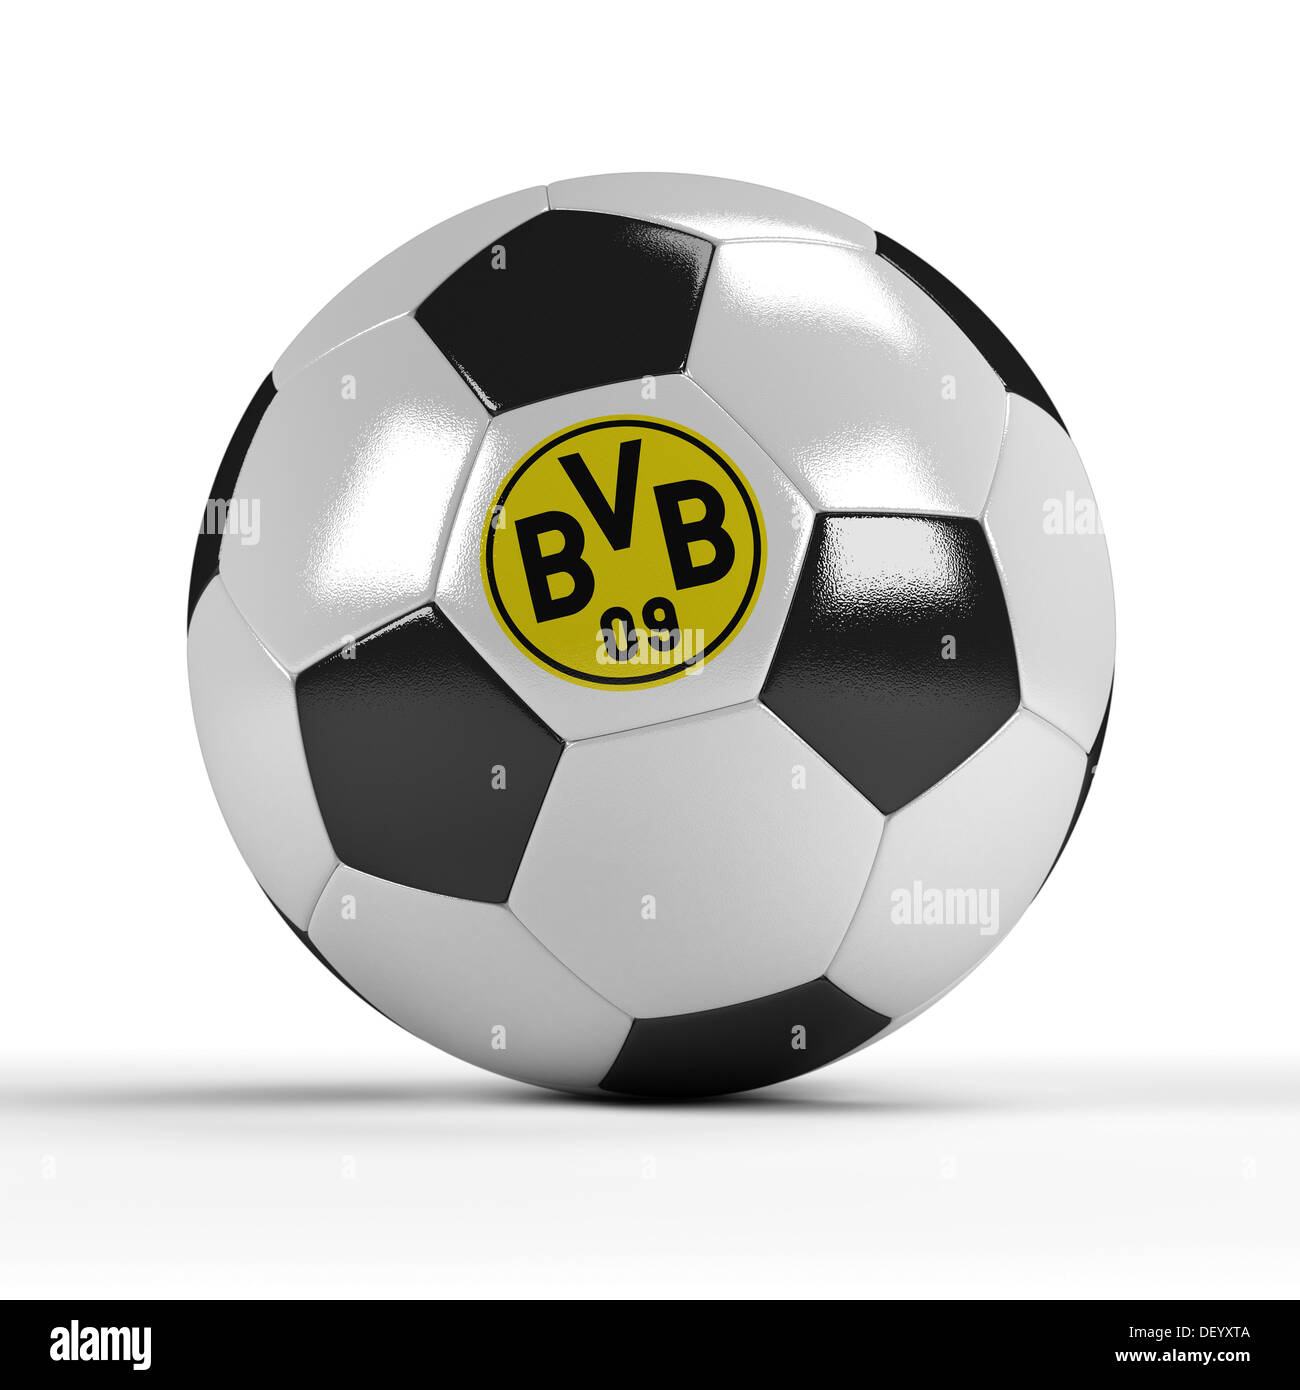 Football with the logo of BVB Borussia Dortmund Stock Photo - Alamy